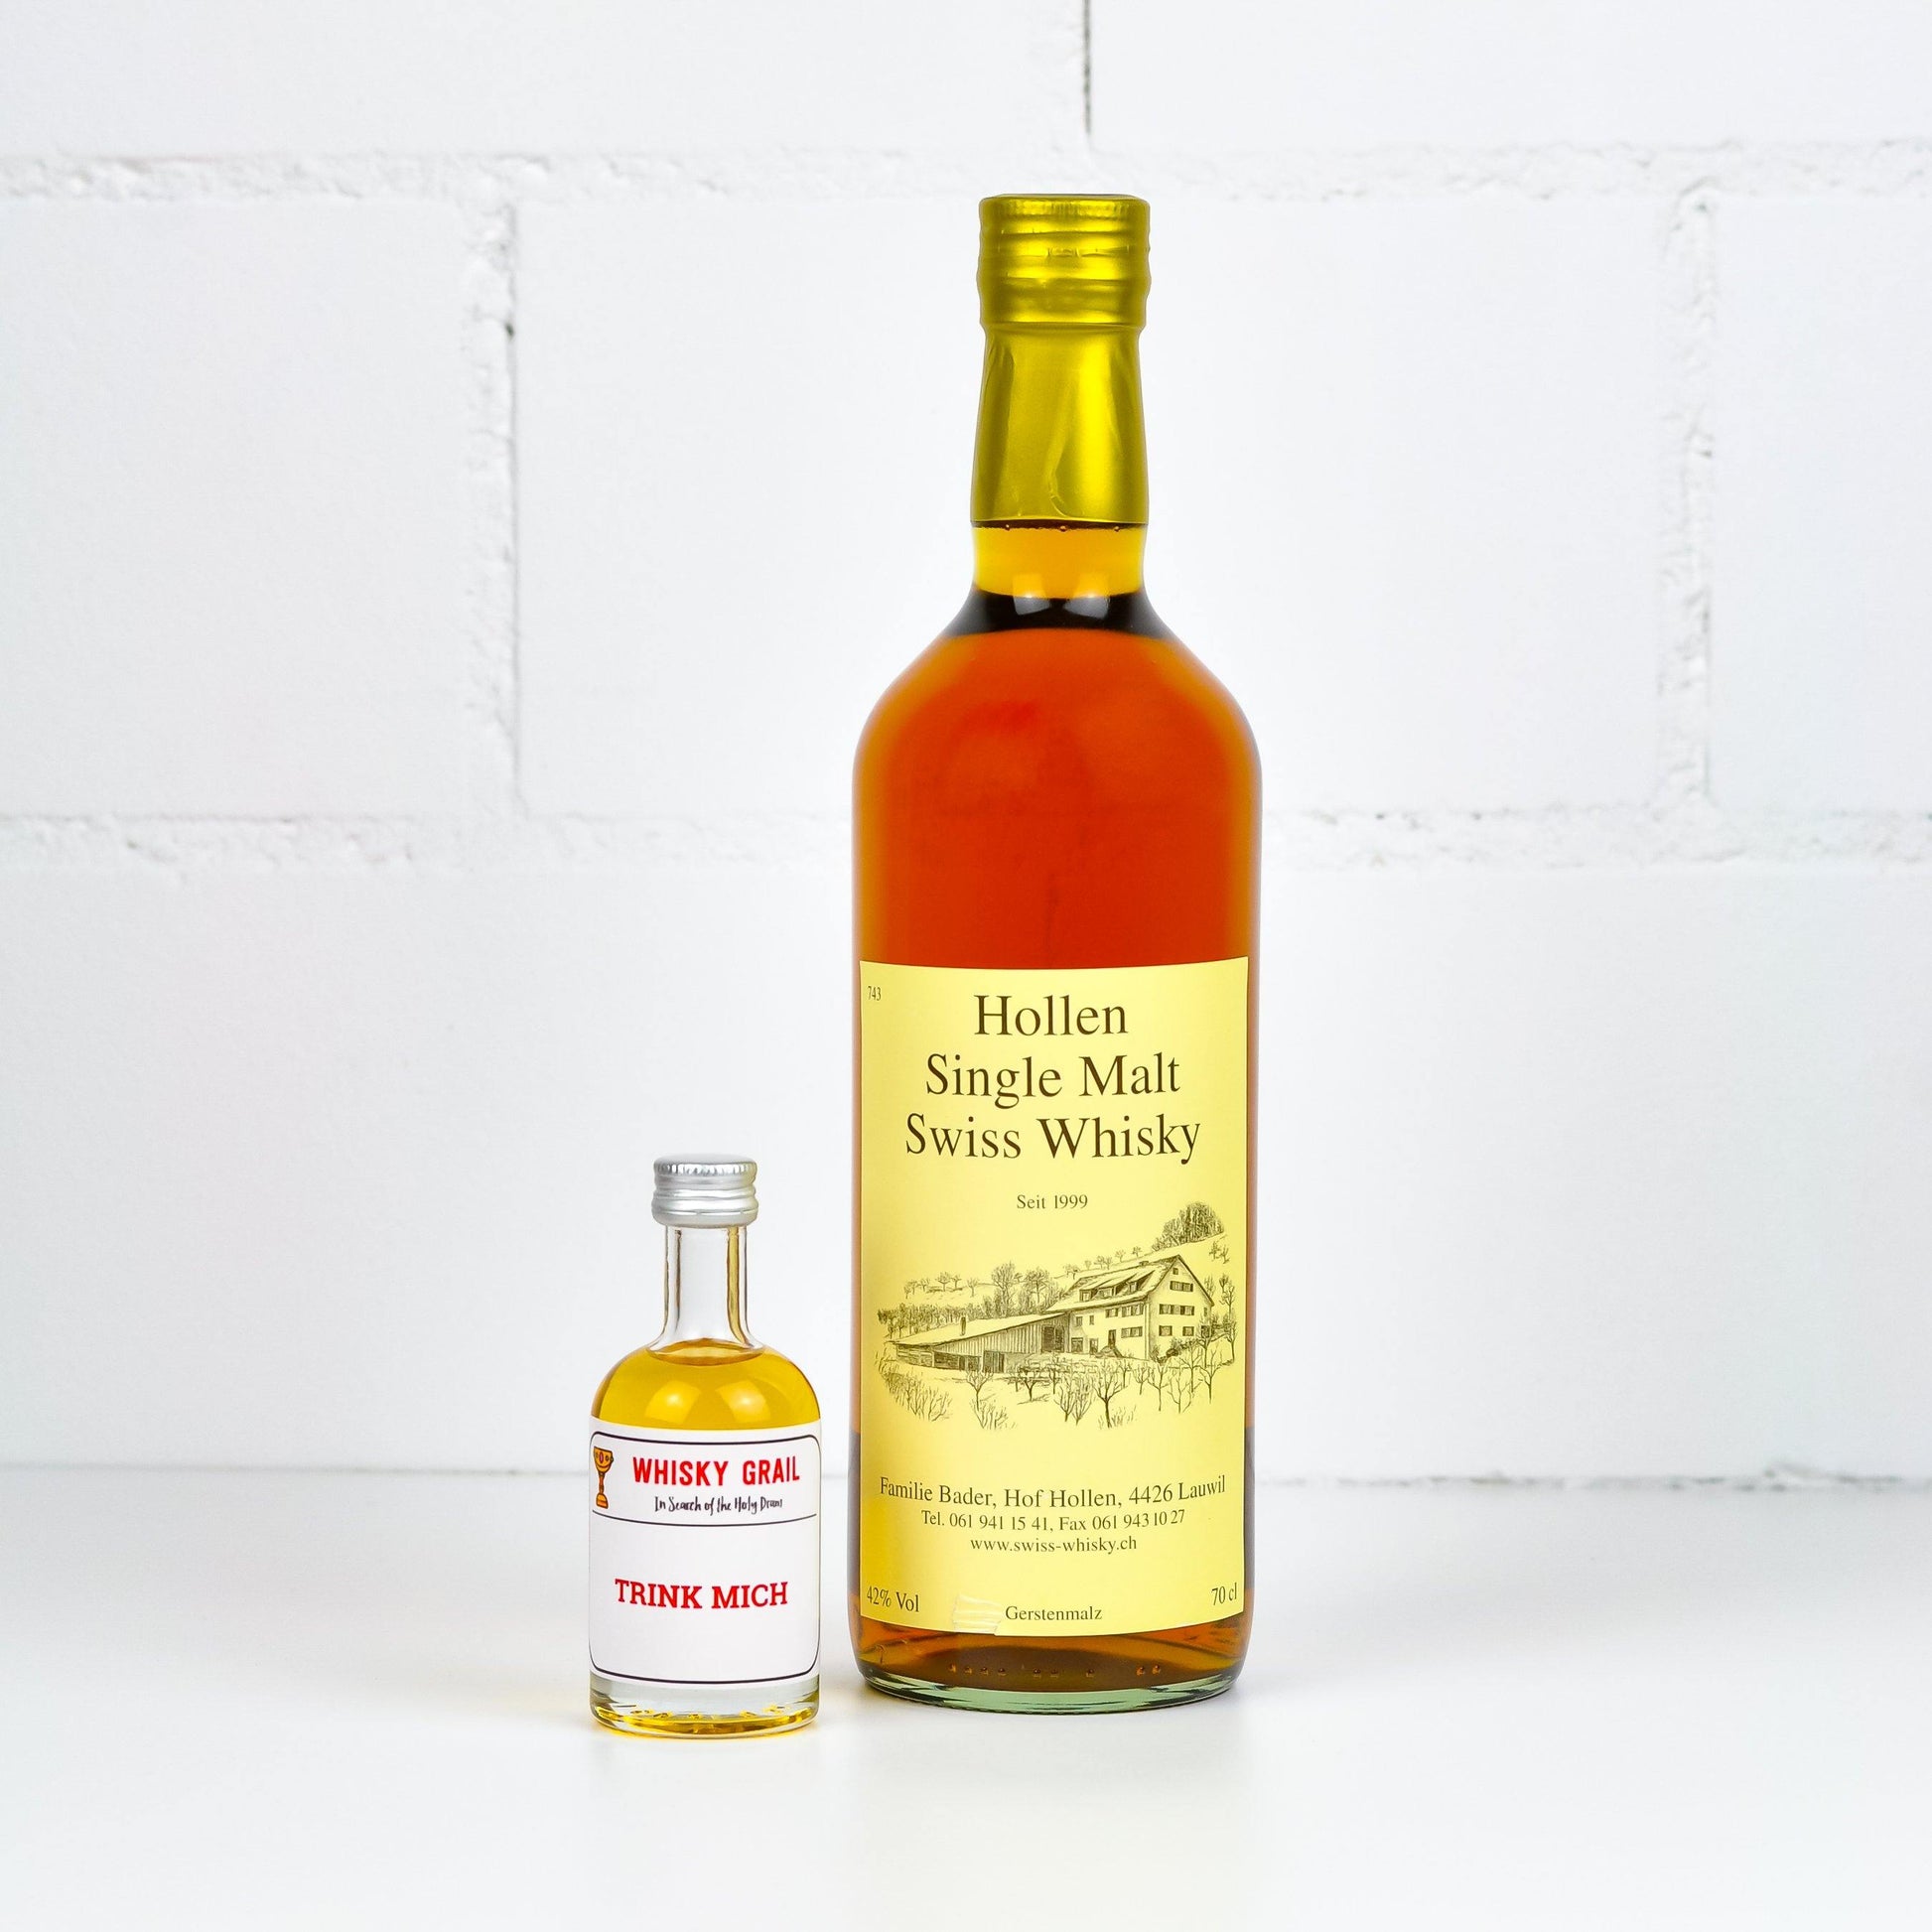 Hollen Single Malt Chardonnay Casks - Whisky Grail